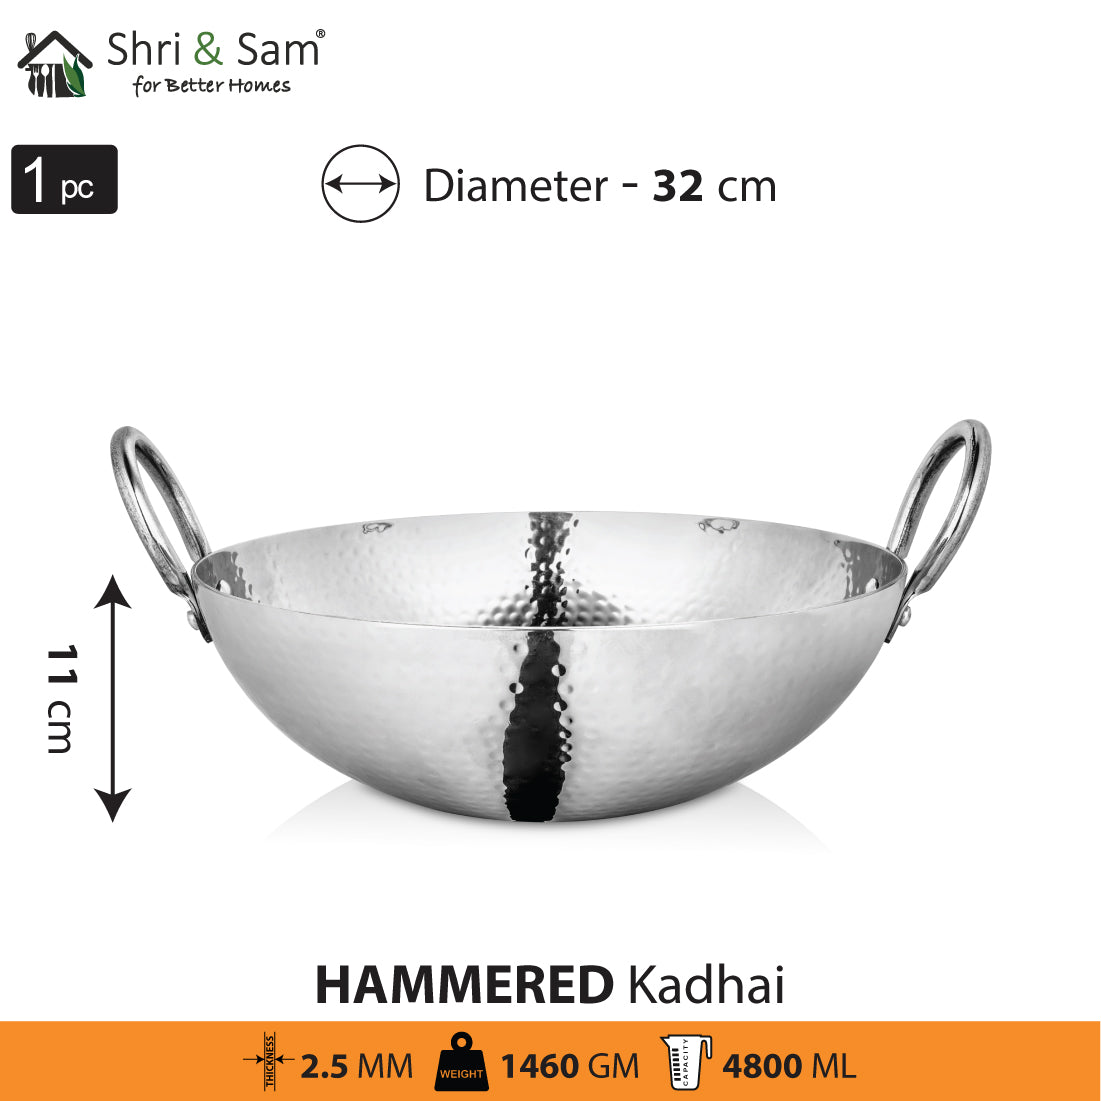 Stainless Steel Triply Deep Hammered Kadhai Pro